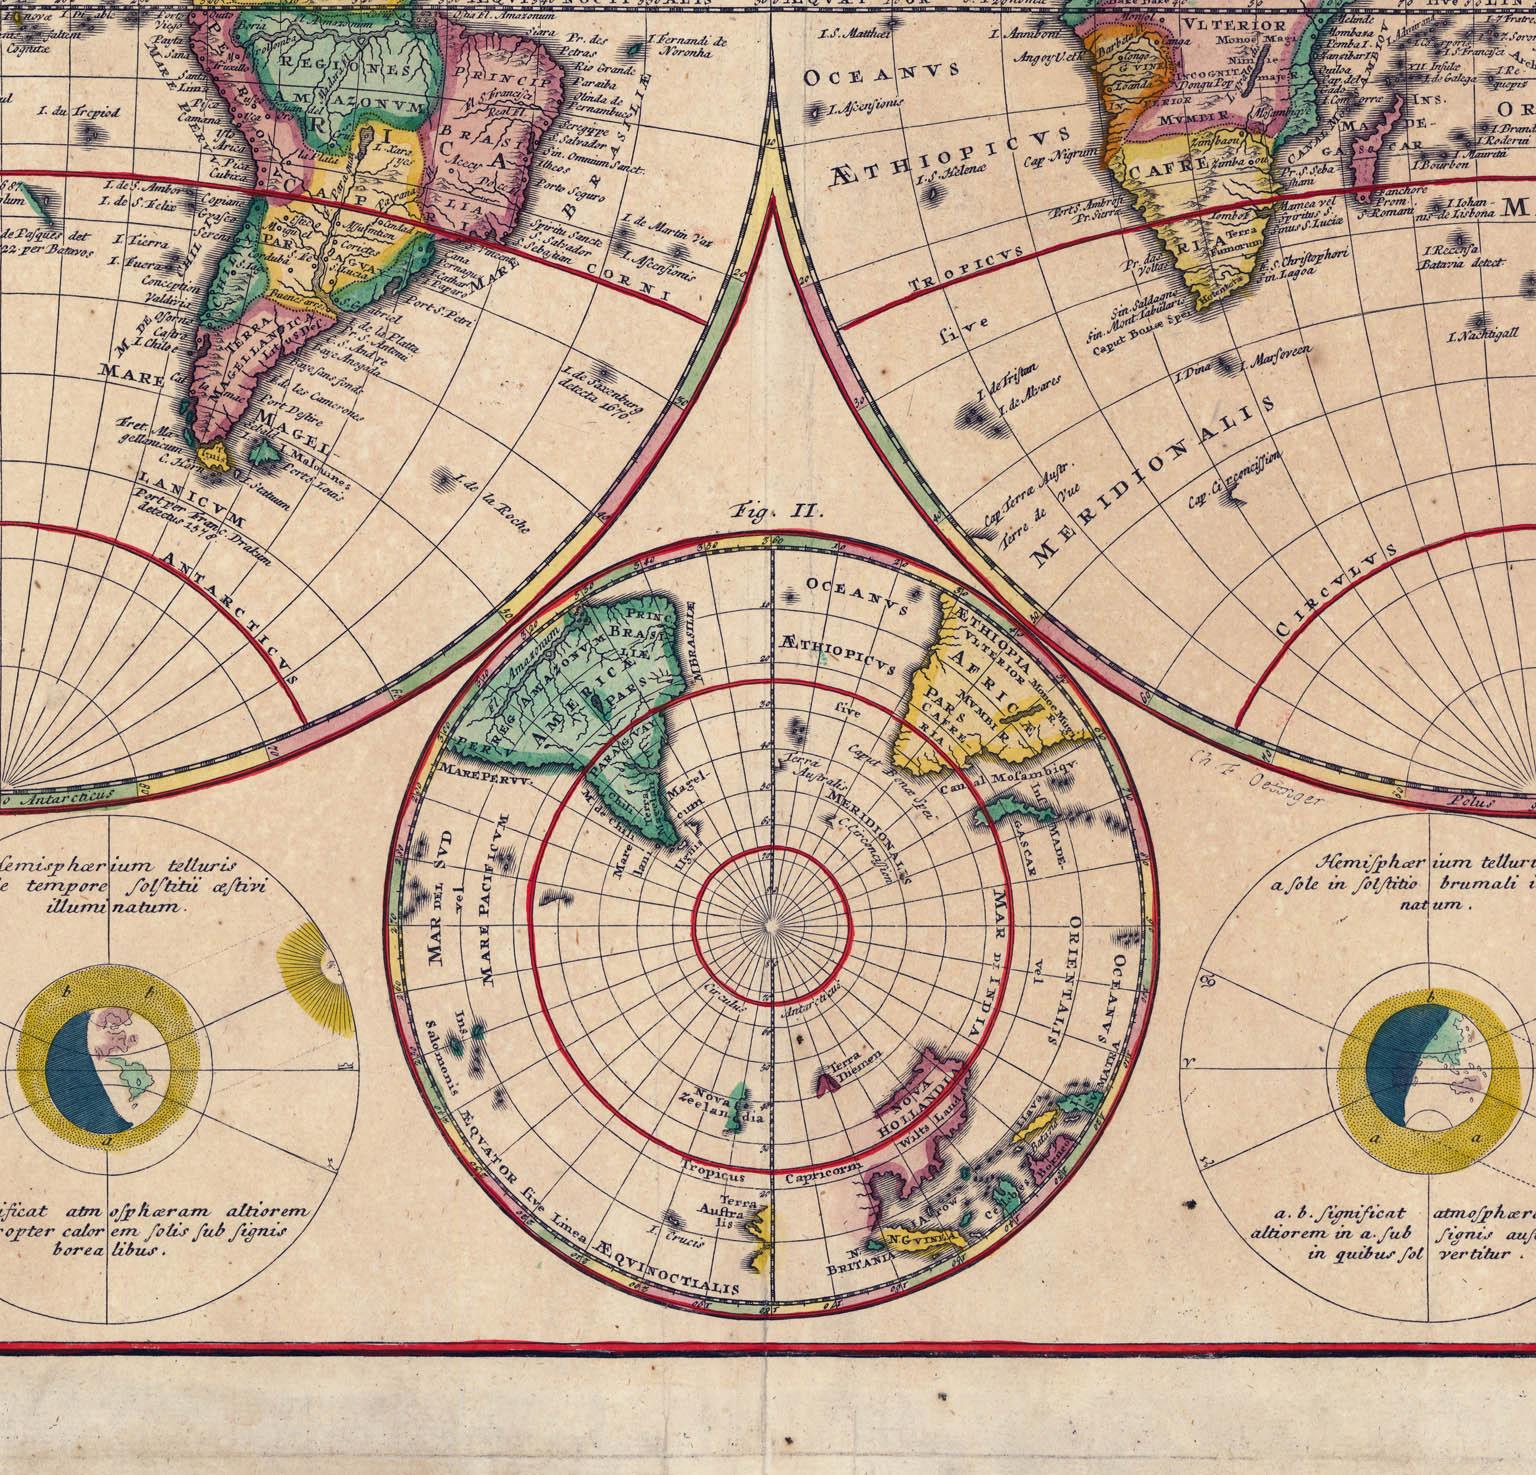 Planiglobii Terrestris Mappa Universalis / Mappe Monde - Other Art Style Print by Homann Heirs